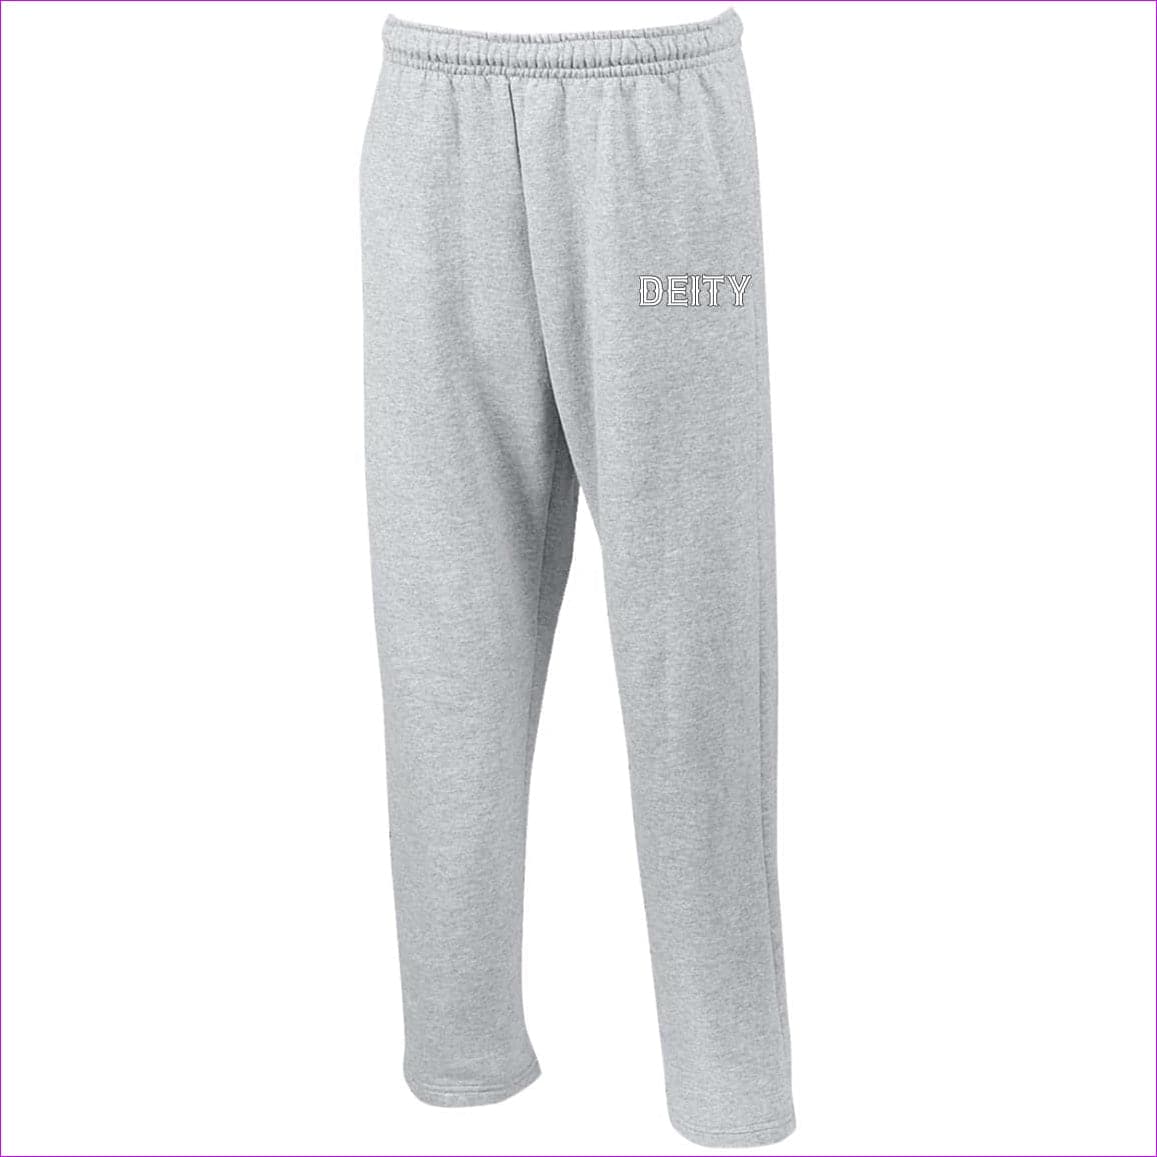 Deity Open Bottom Sweatpants with Pockets - unisex sweatpants at TFC&H Co.